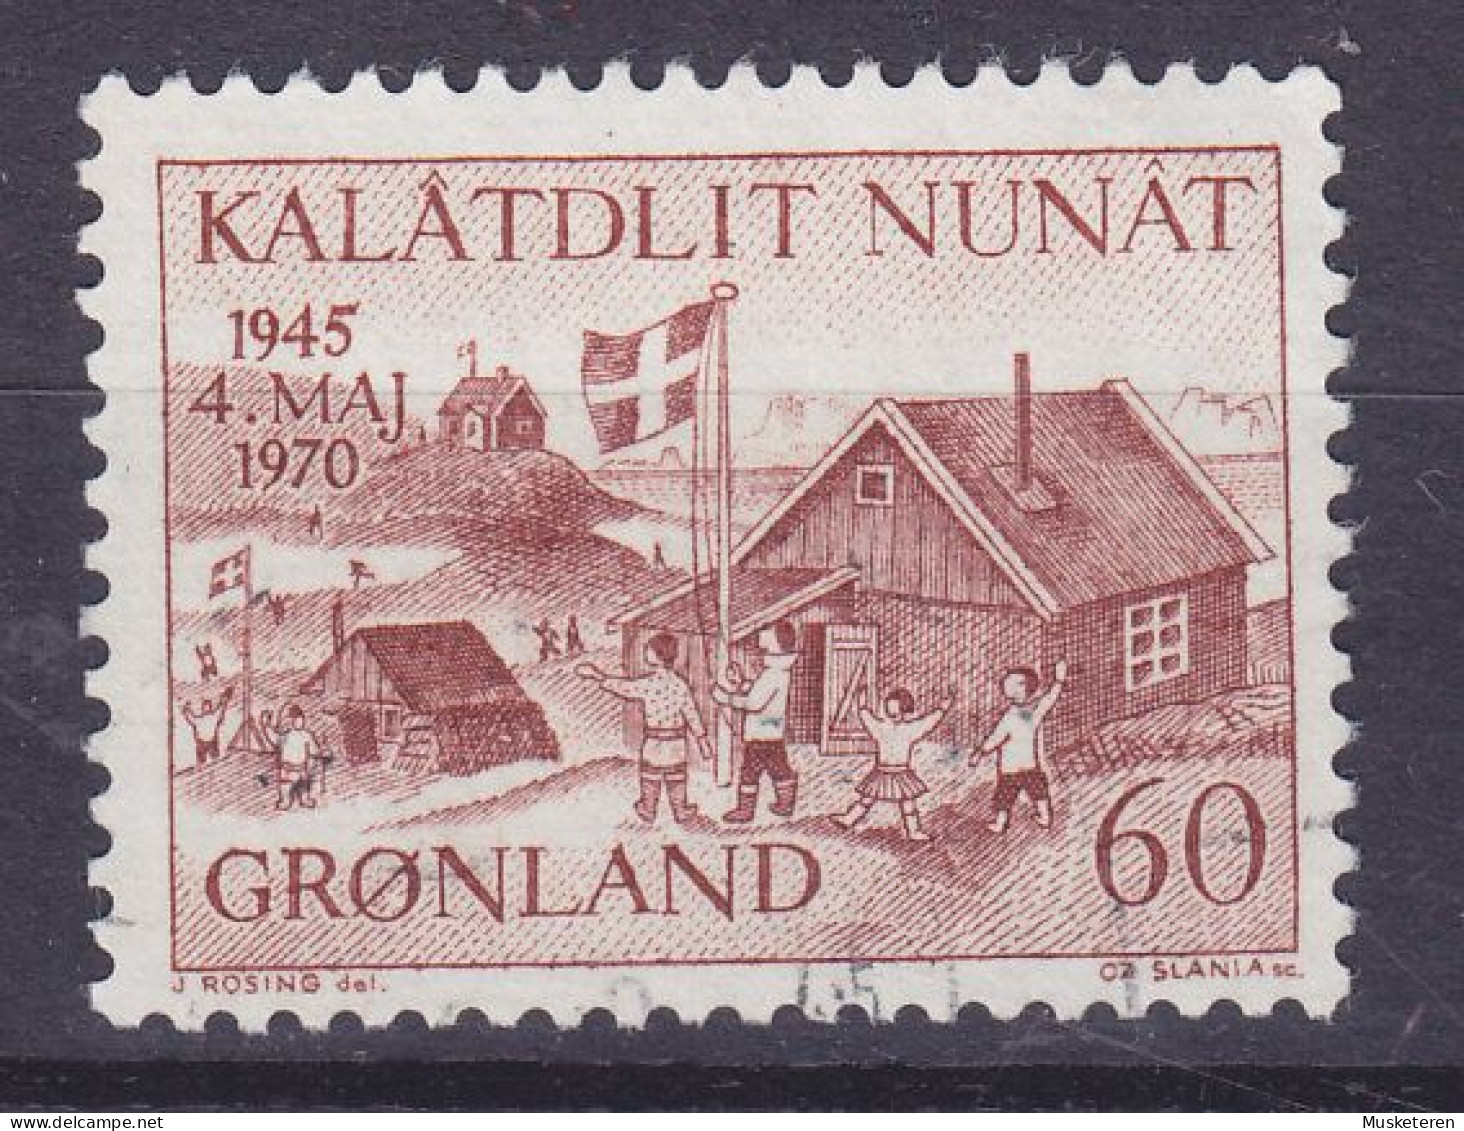 Greenland 1970 Mi. 76, 60 Ø Jahrestag Der Befreiung Dänemarks (Cz. Slania) - Oblitérés